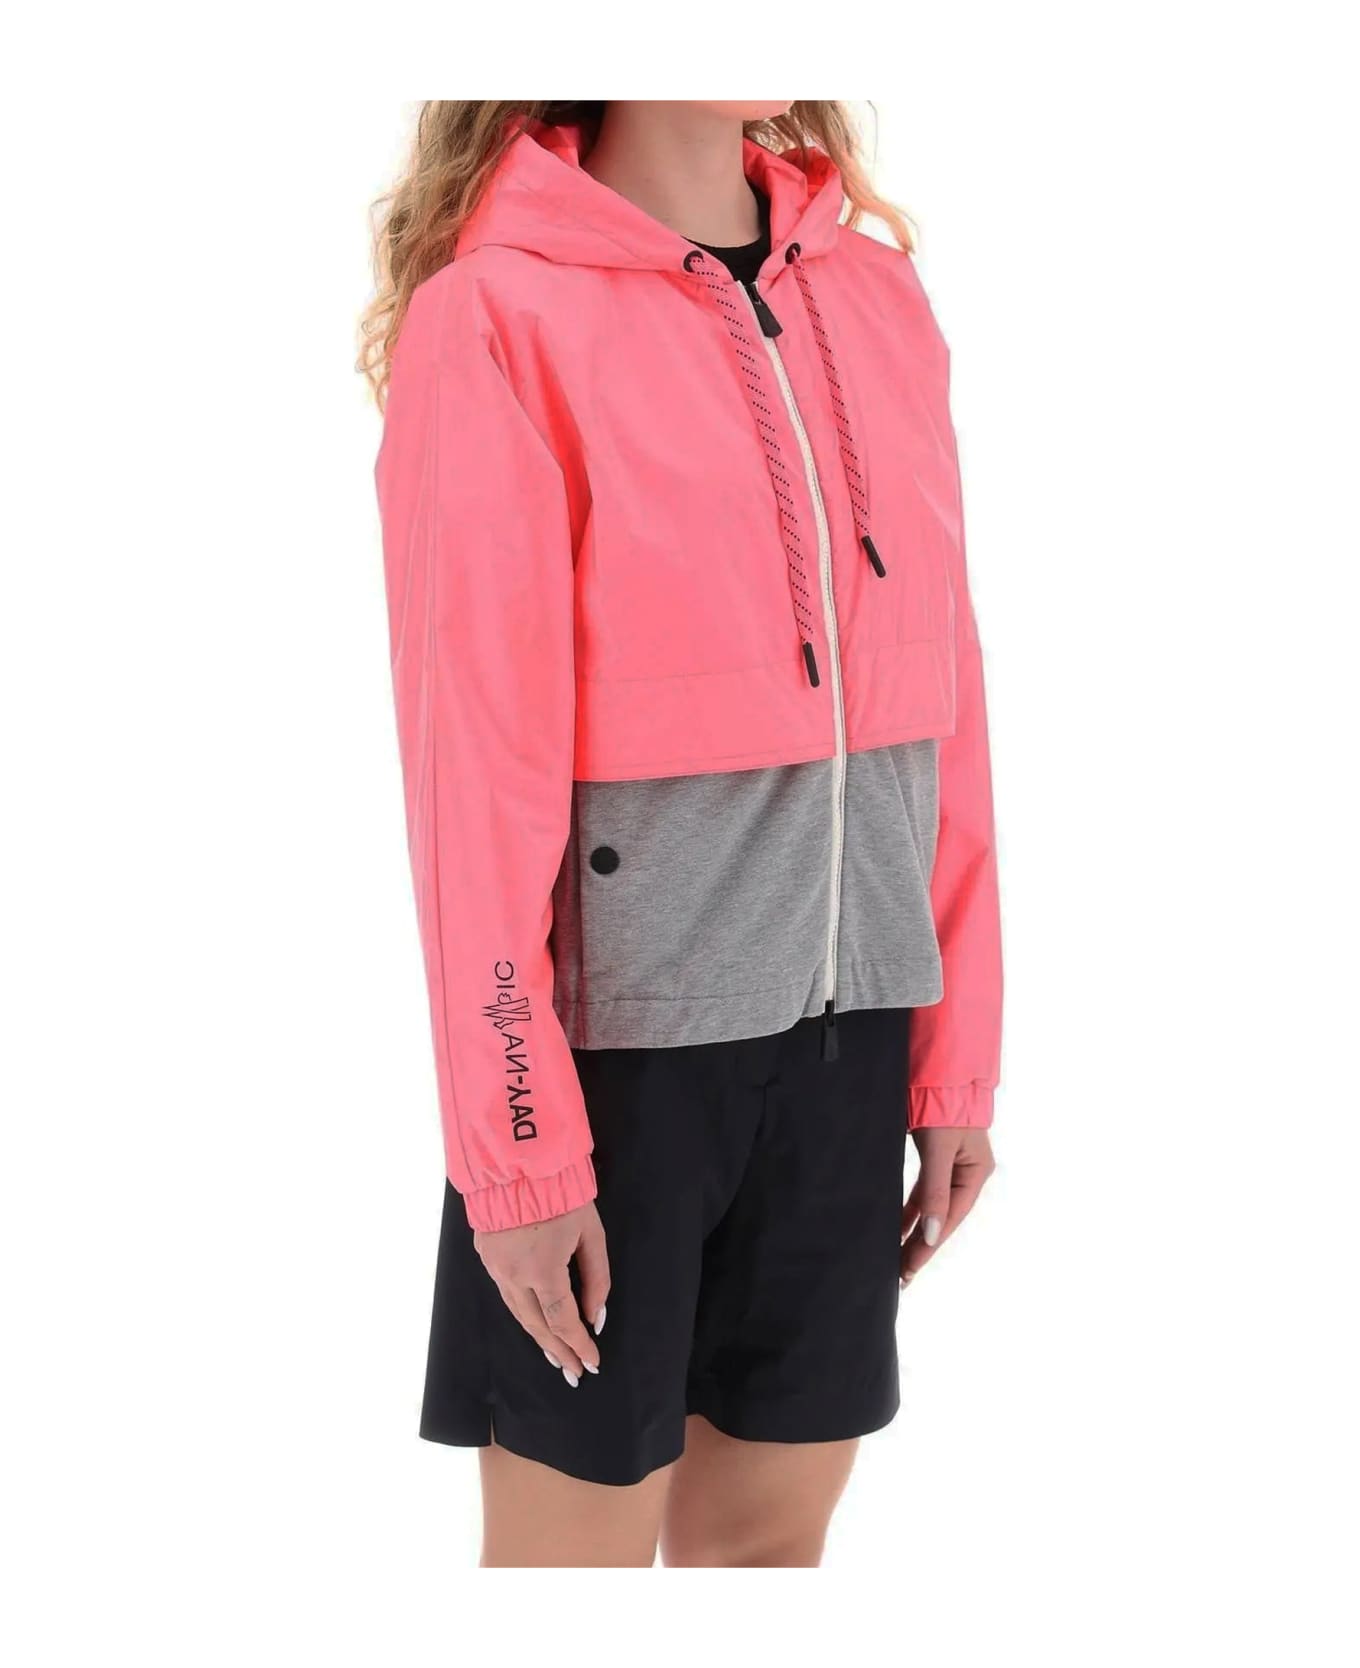 Moncler Grenoble Grenoble Hoodie Jacket - Pink